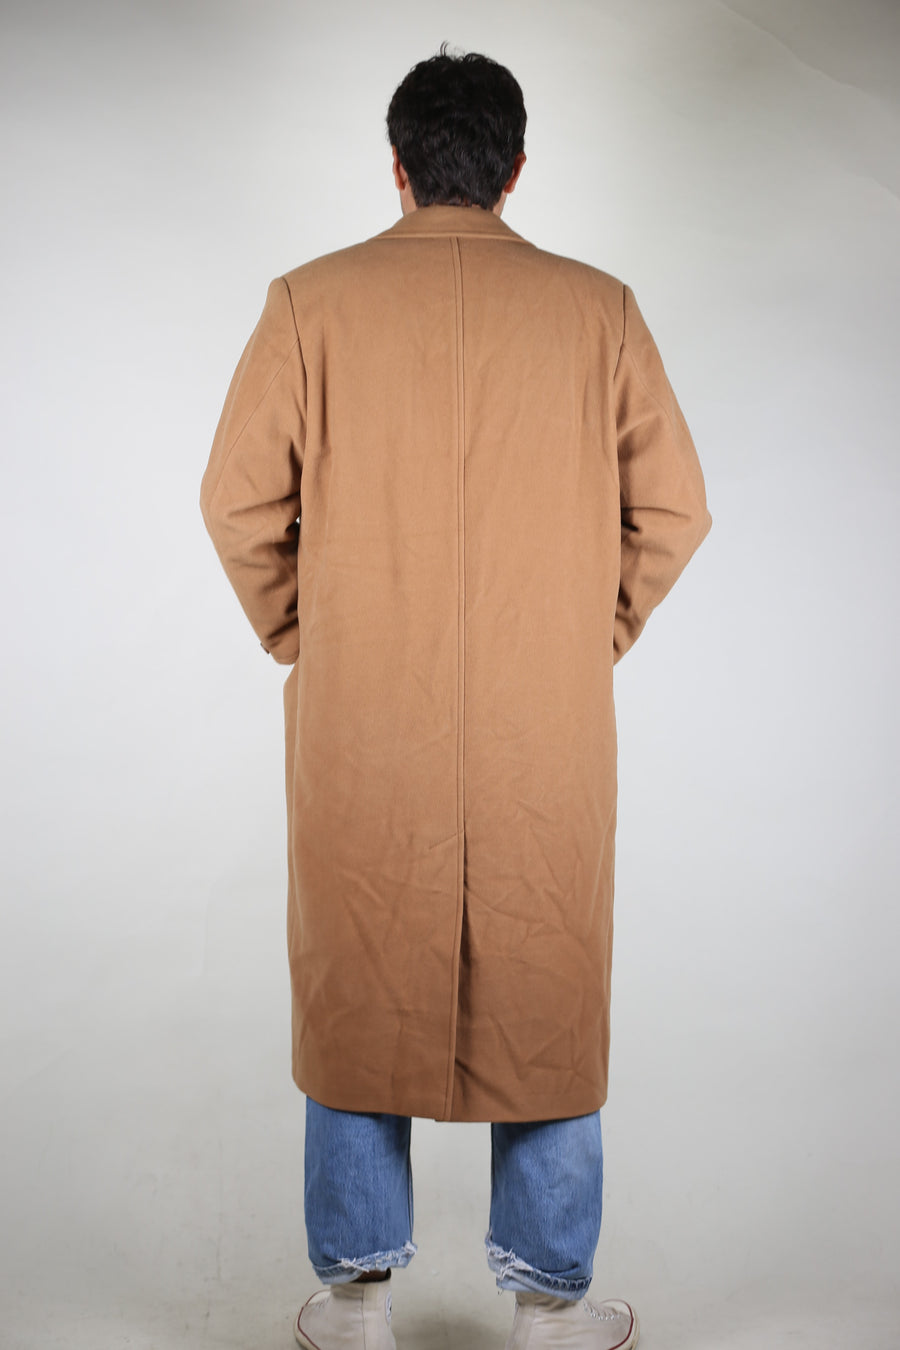 Missoni vintage camel single-breasted coat - XL -